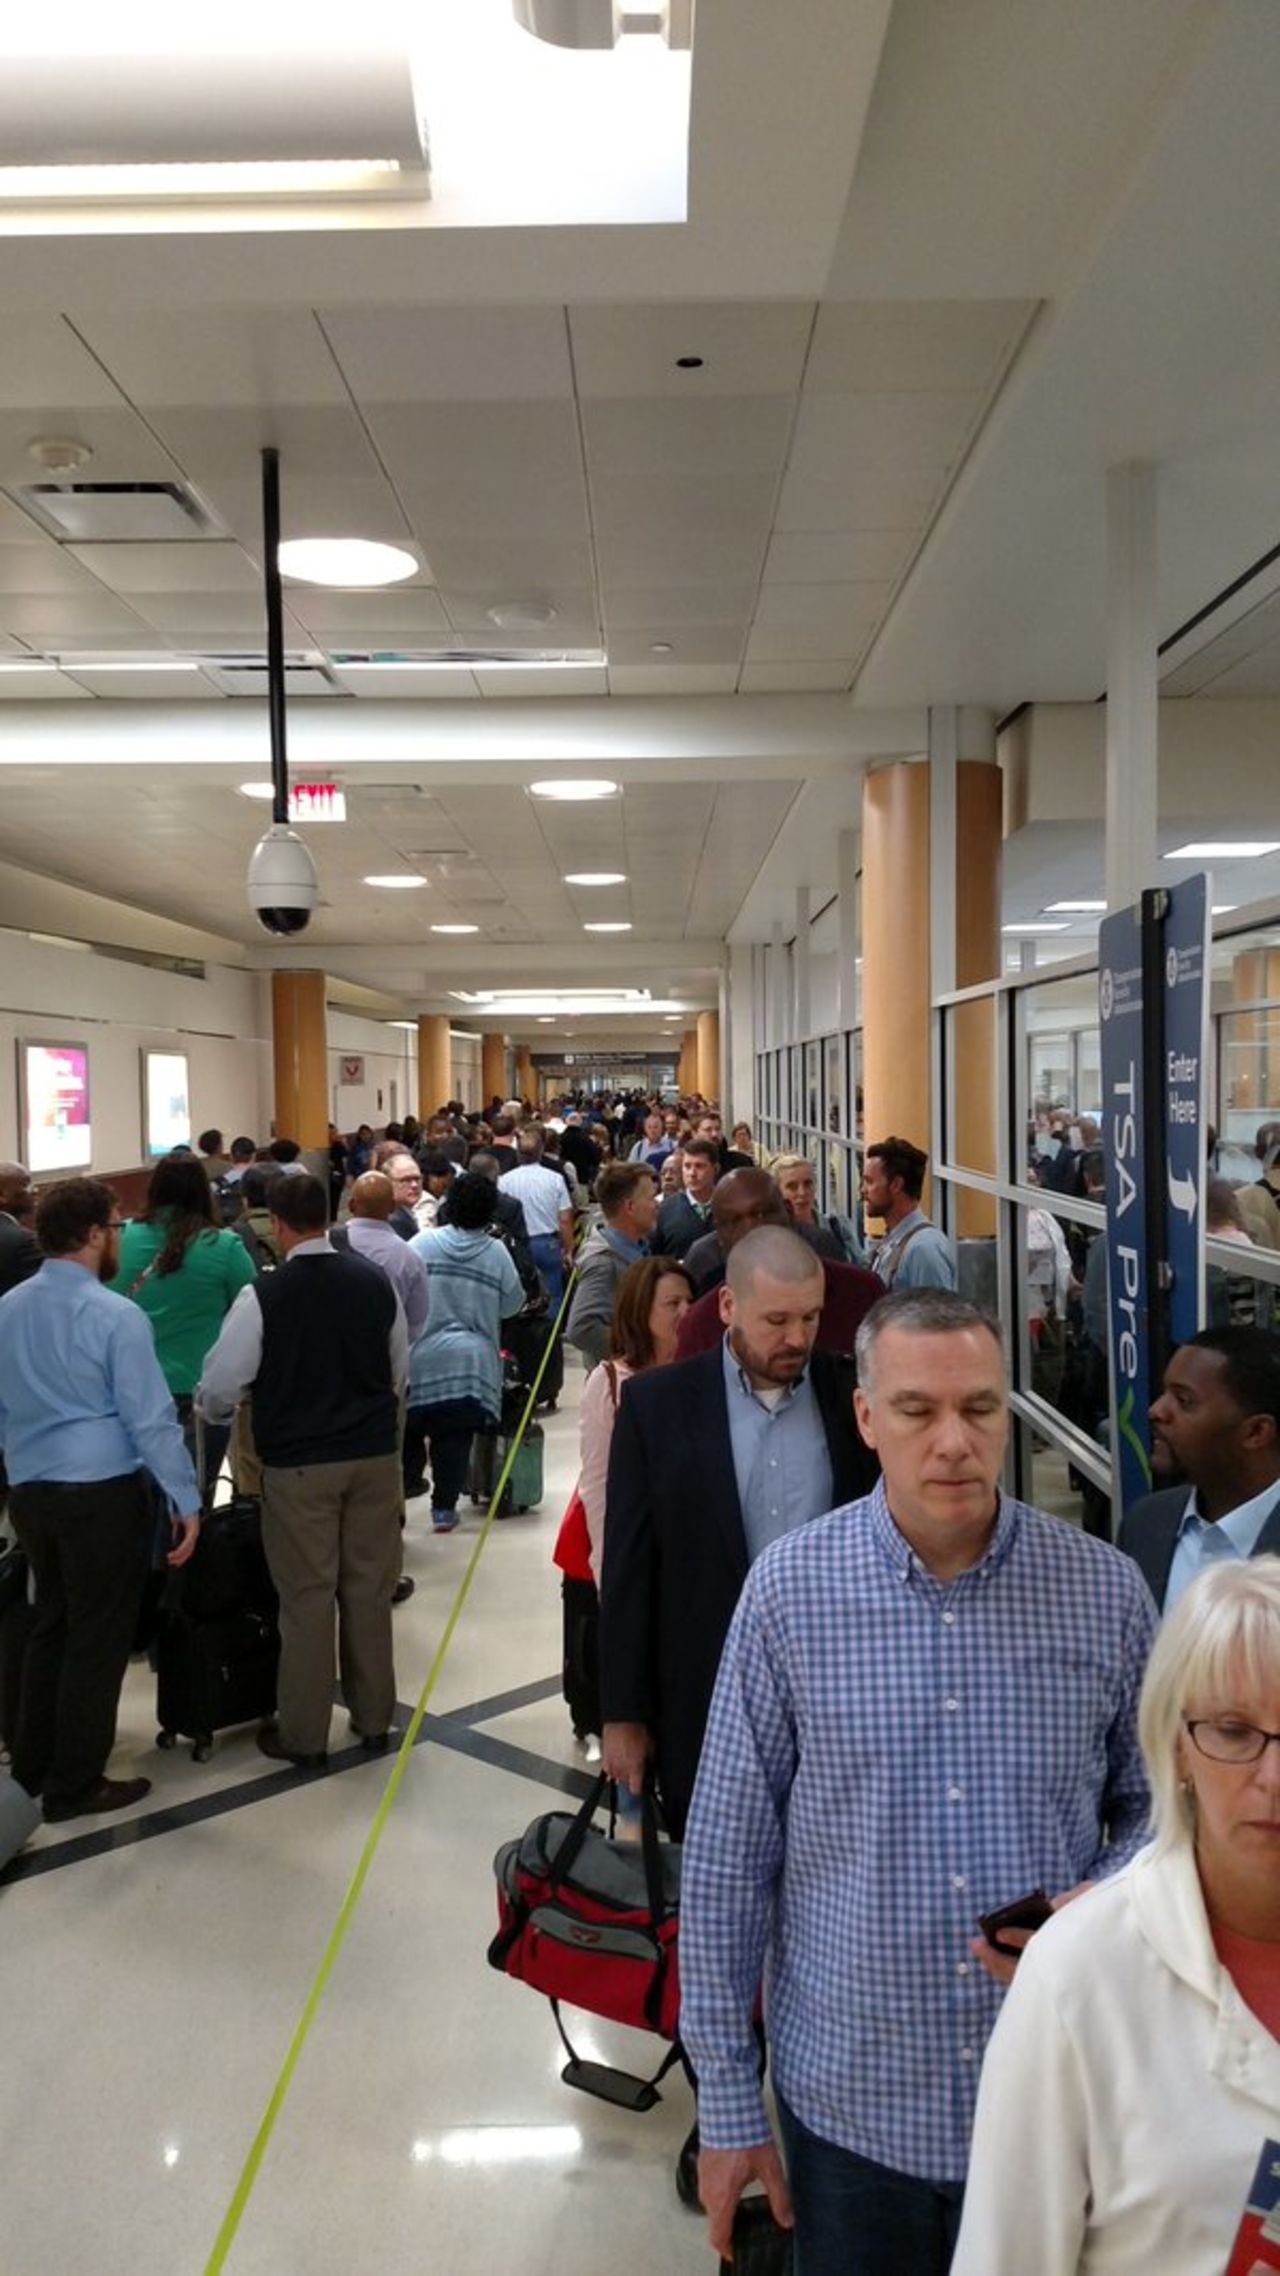 The TSA PreCheck was 45 minutes long on Monday at Atlanta's Hartsfield-Jackson International Airport, one traveler says.